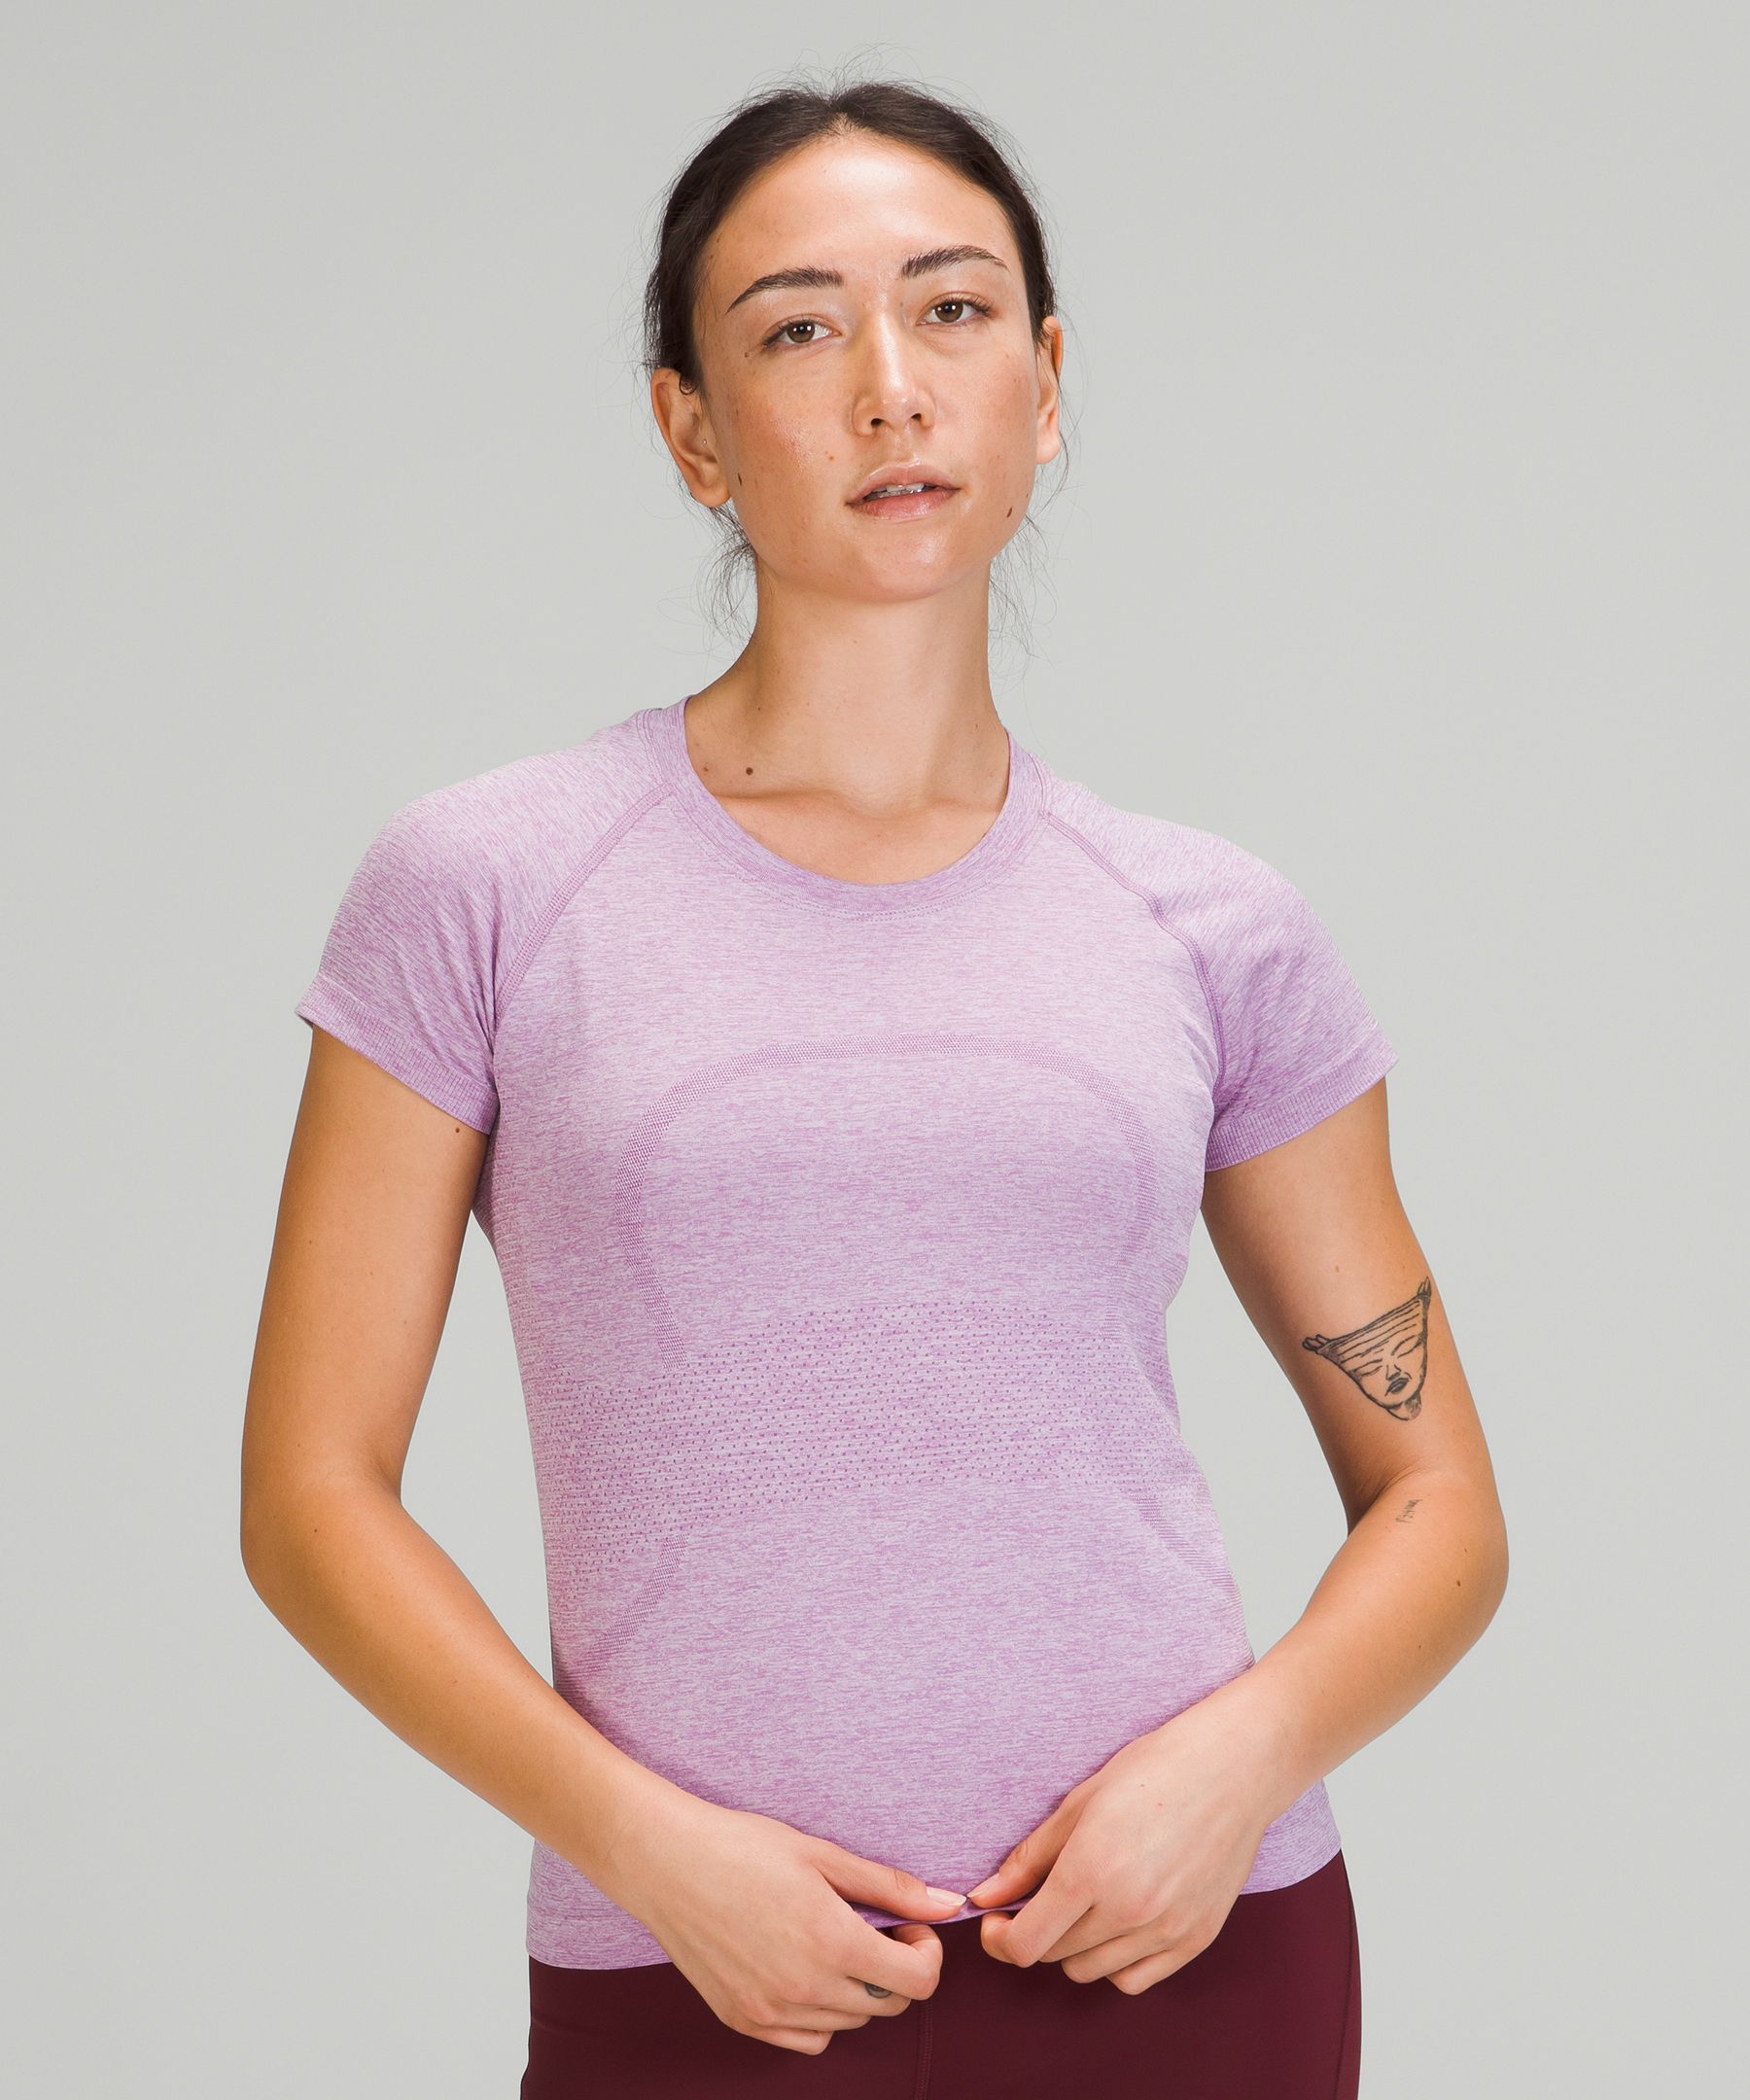 Lululemon Swiftly Tech Short Sleeve Shirt 2.0 Race Length In Wisteria Purple/lavender Dew